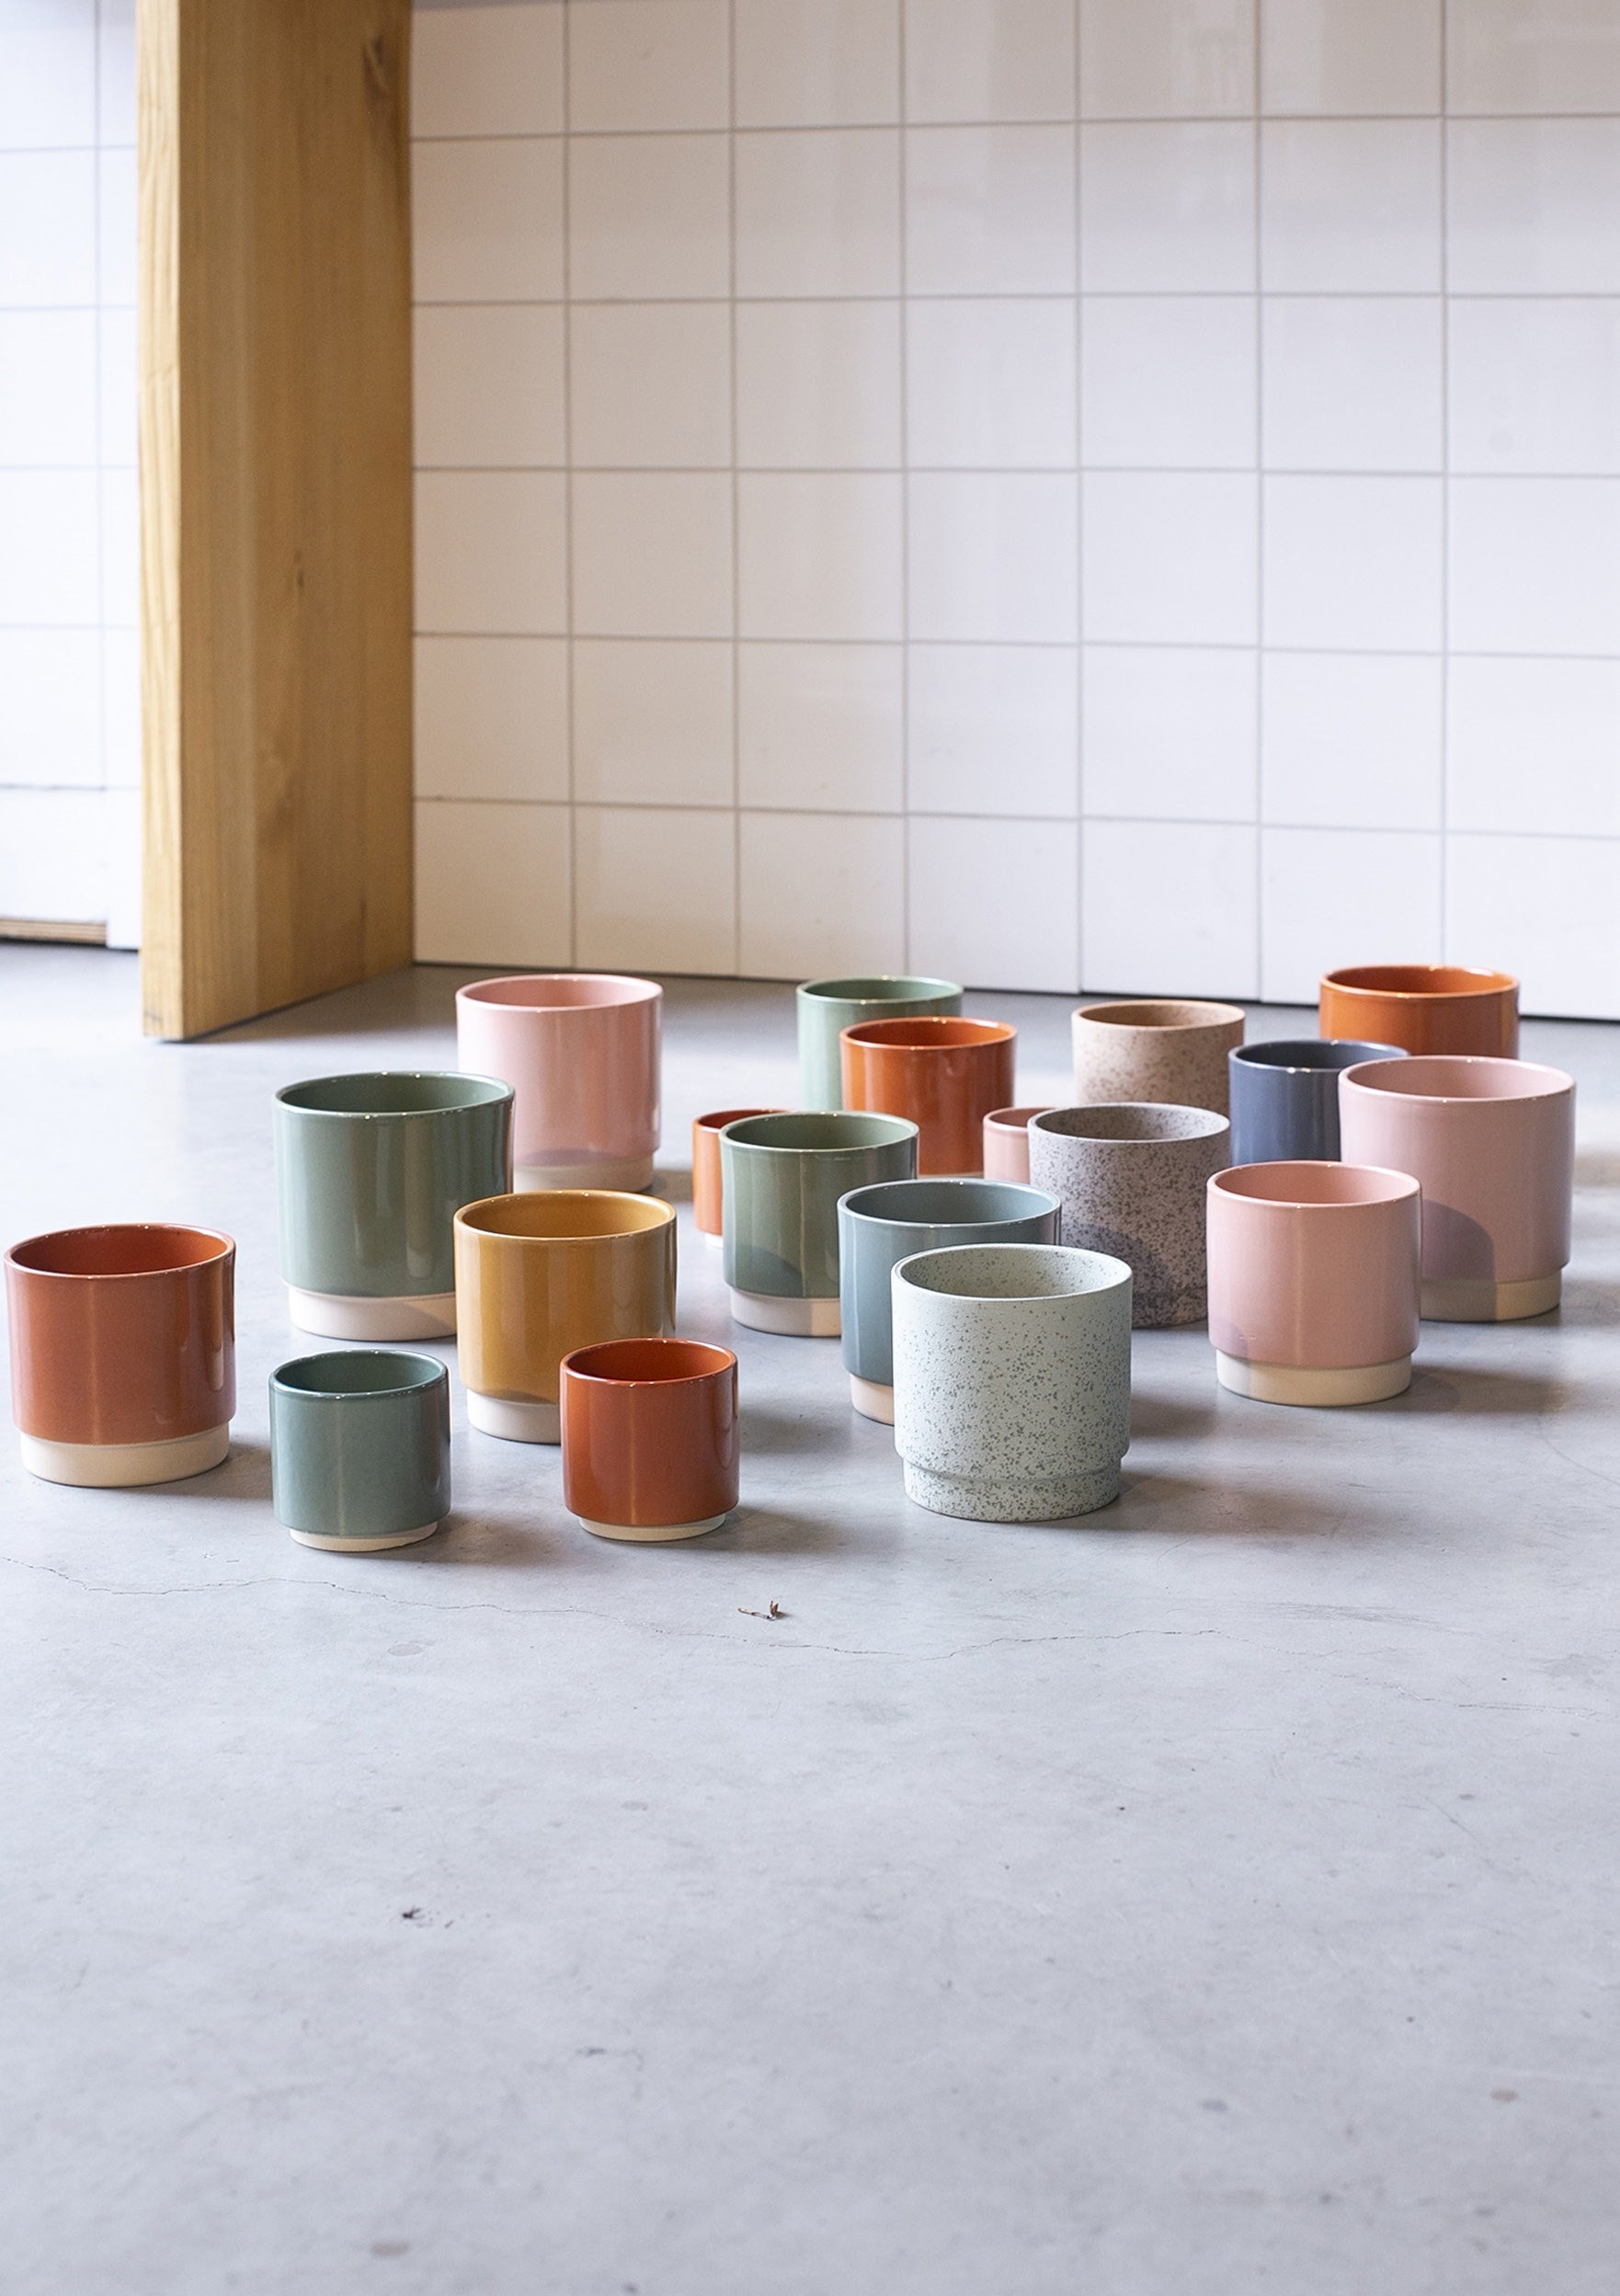 Ceramics Limburg - Bloempot 'Eno Duo' (8cm) - Dusty Pink